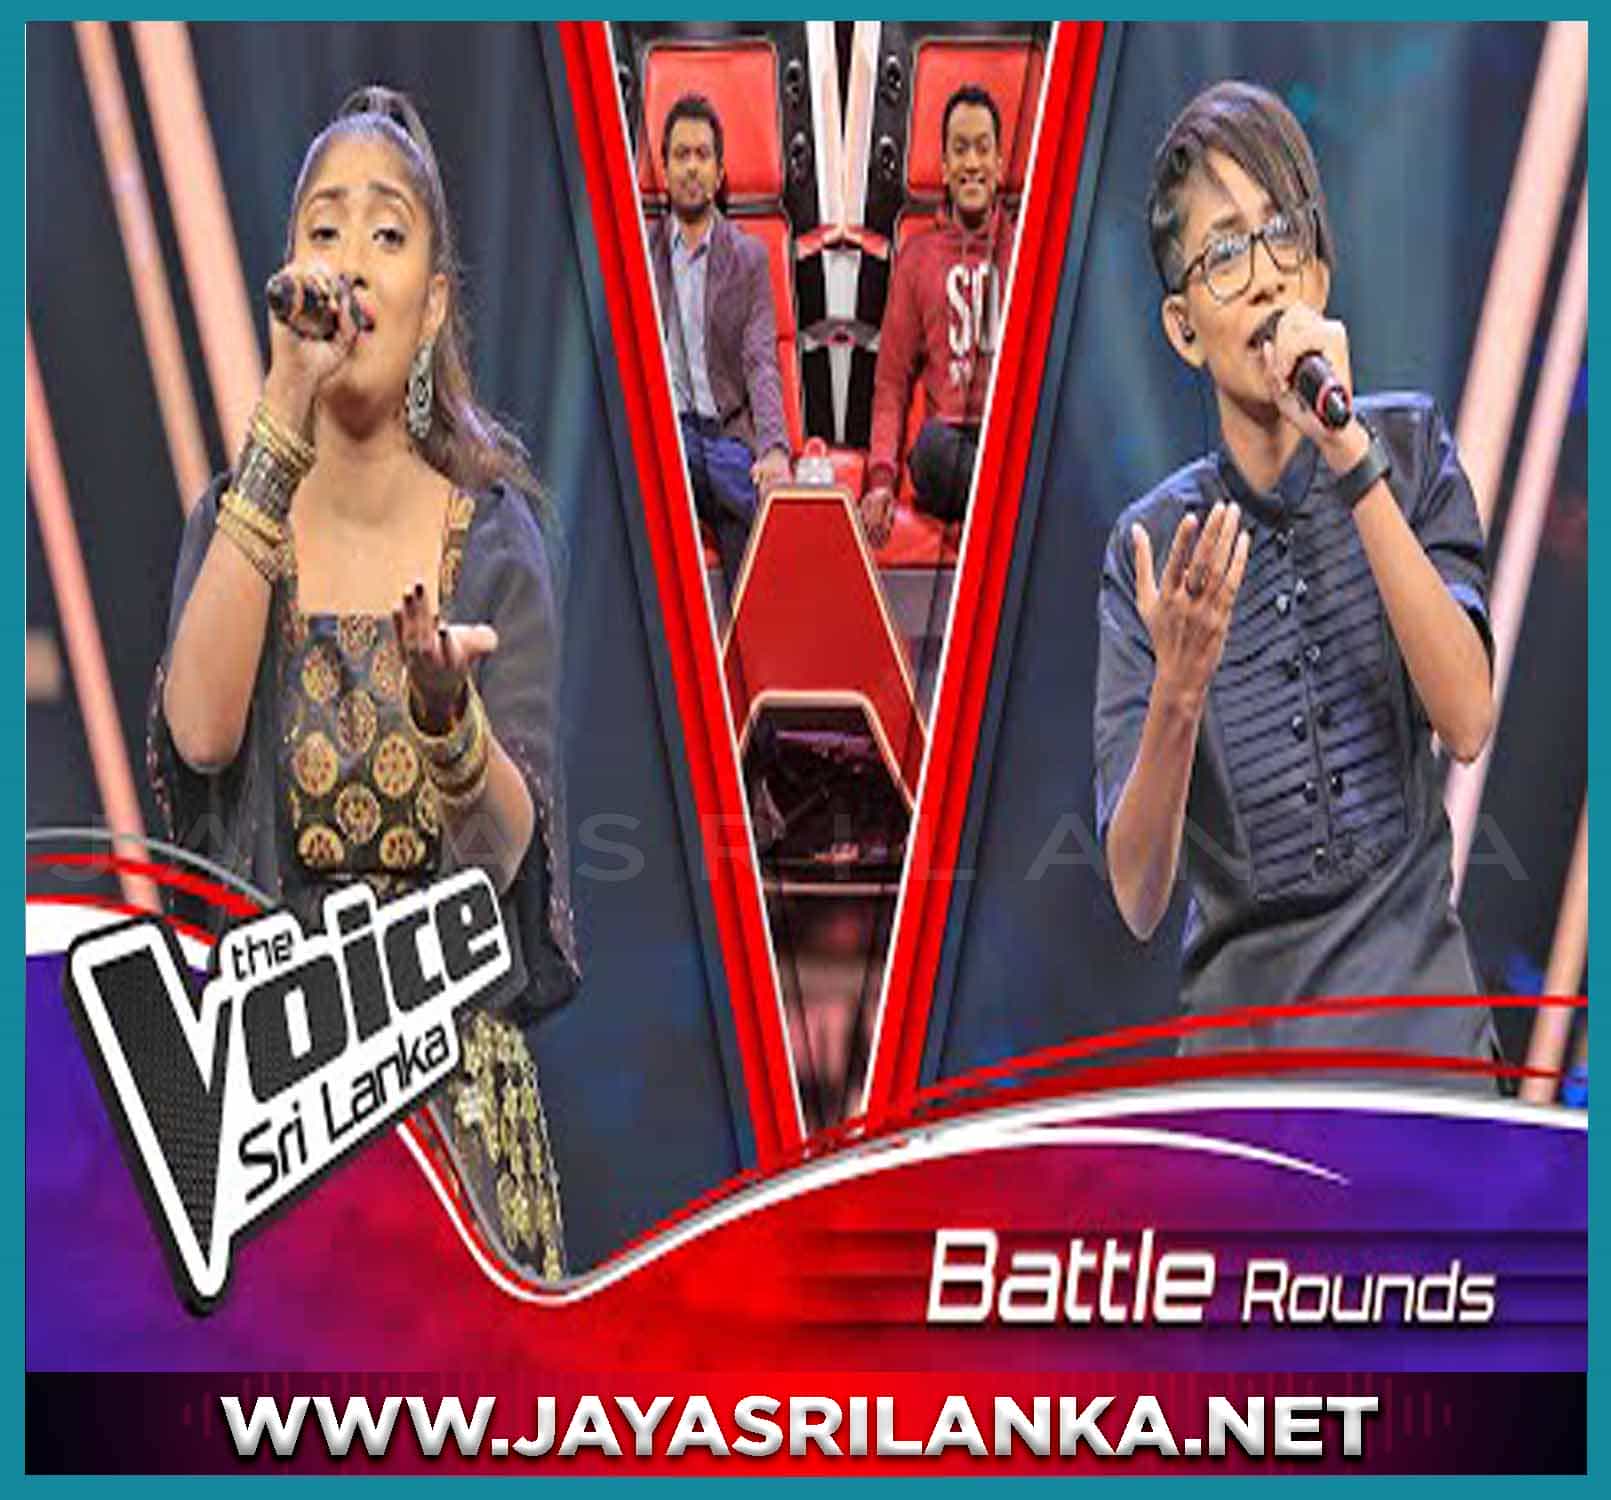 Nadagam Geeya (Battle Rounds The Voice Sri Lanka)